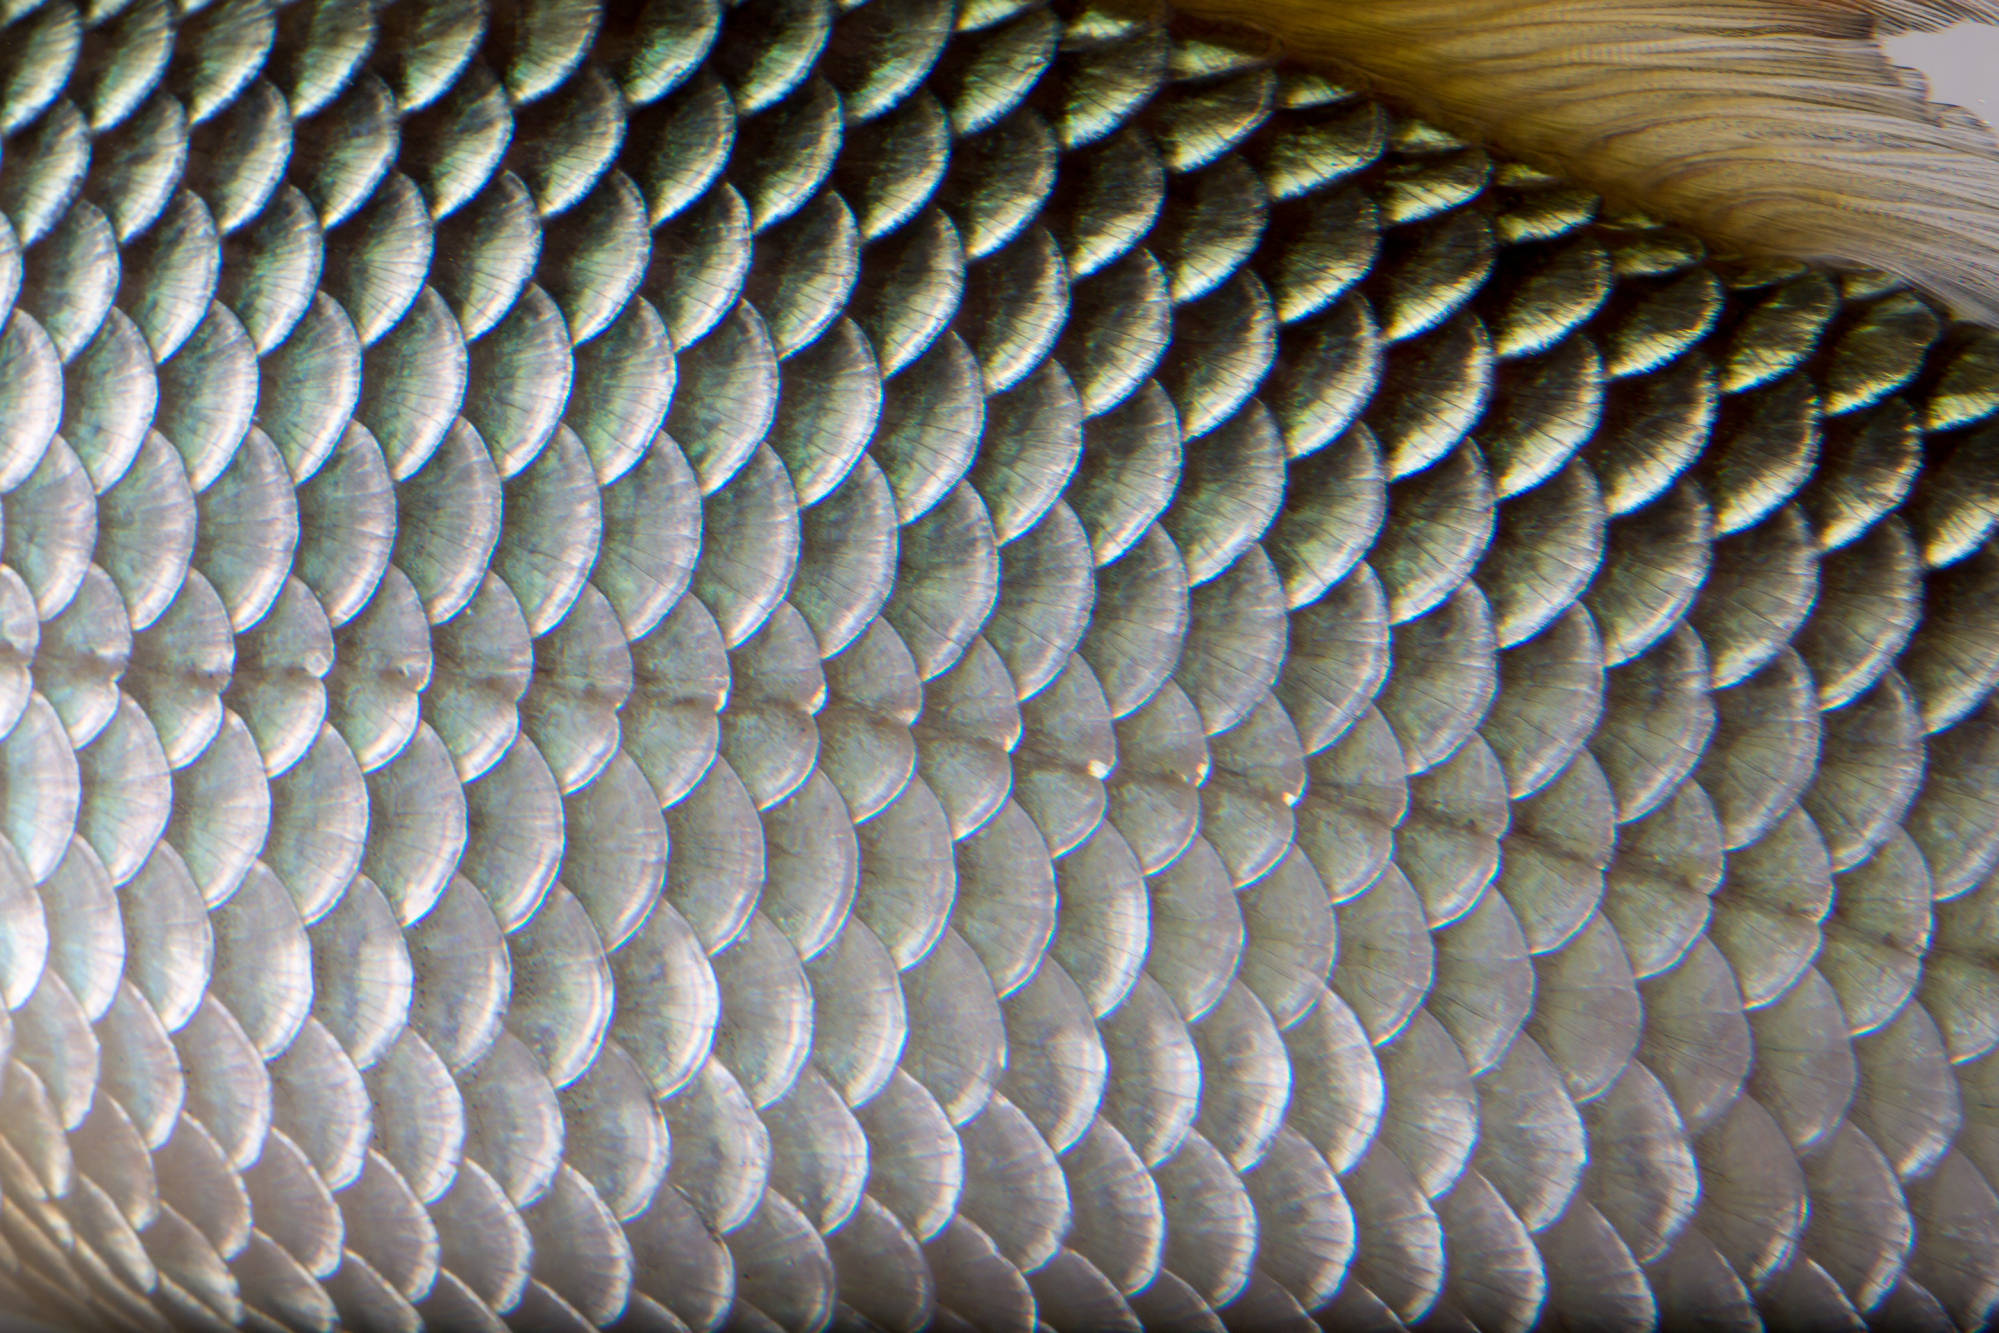 Close-up of sicklefin redhorse scales